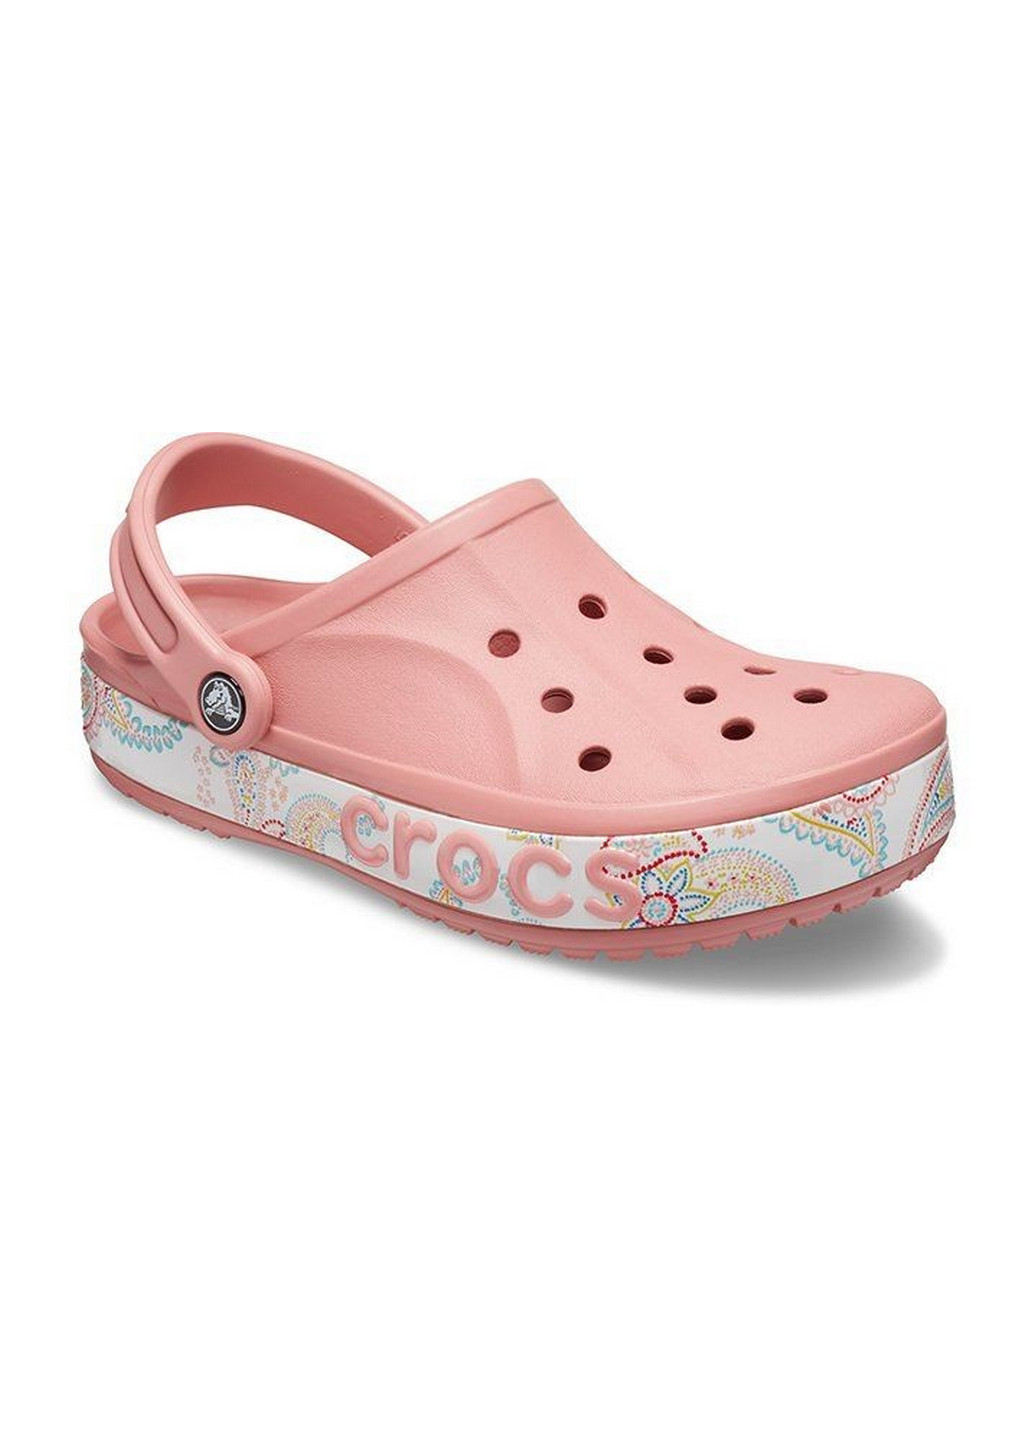 Розовые сабо крокс Crocs